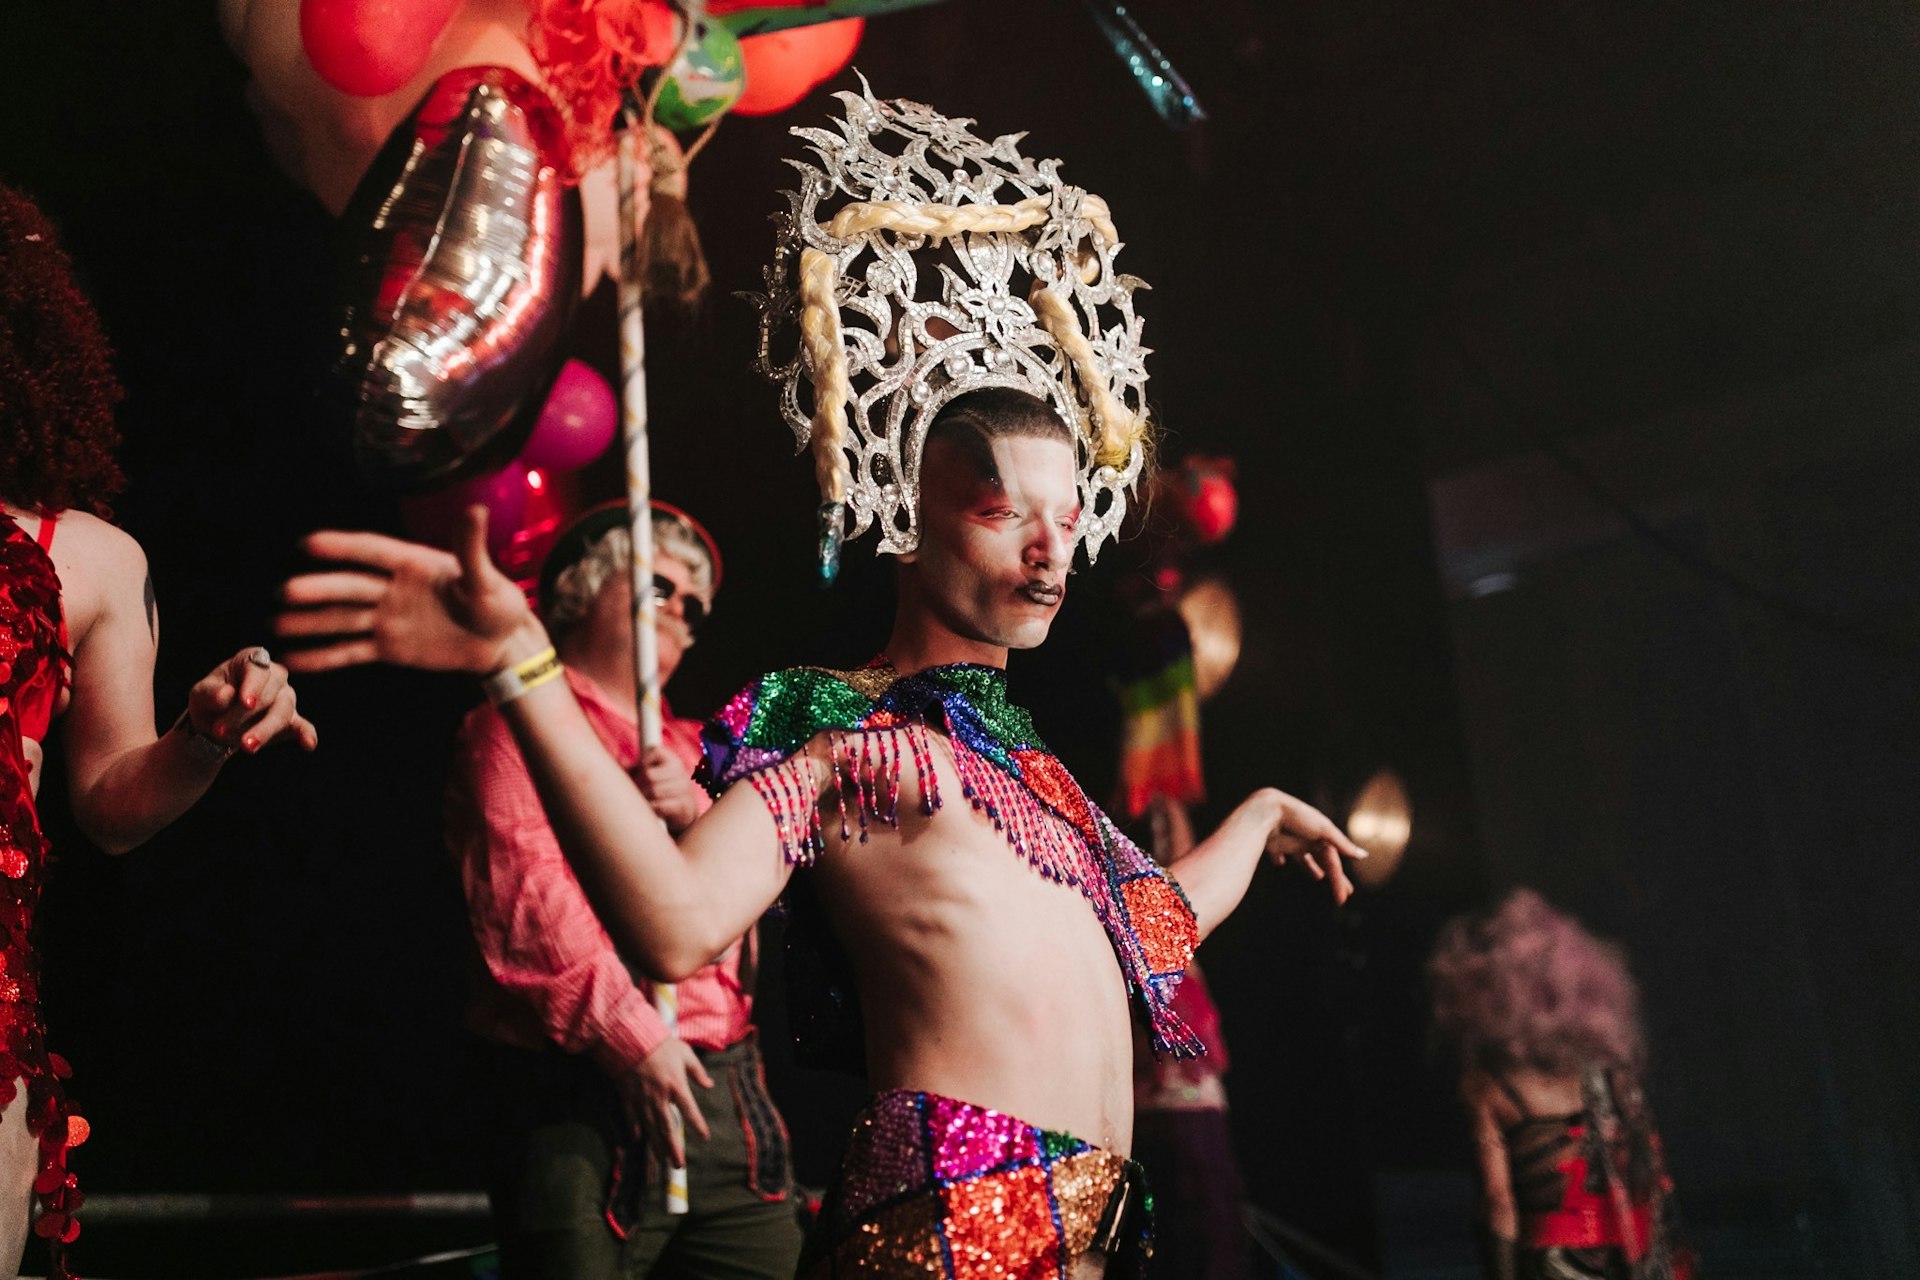 Amsterdam's Milkshake festival is a queer dance party paradise